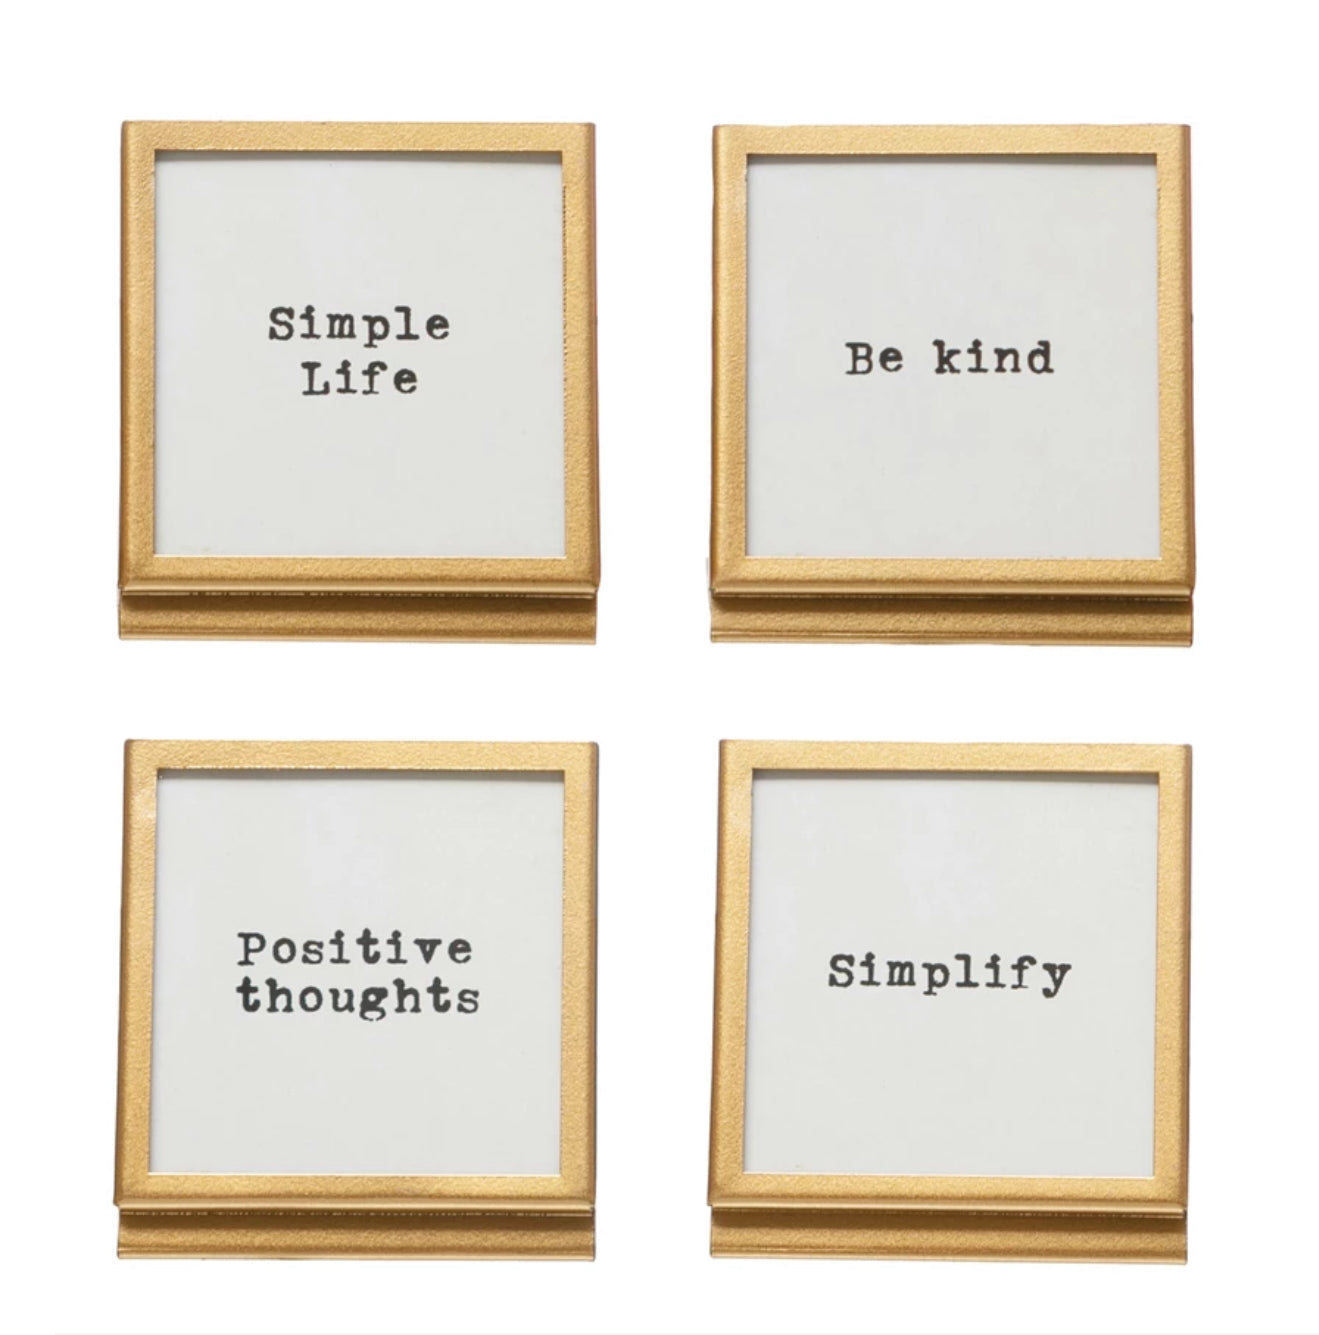 Frame with Uplifting Saying - “Simplify”